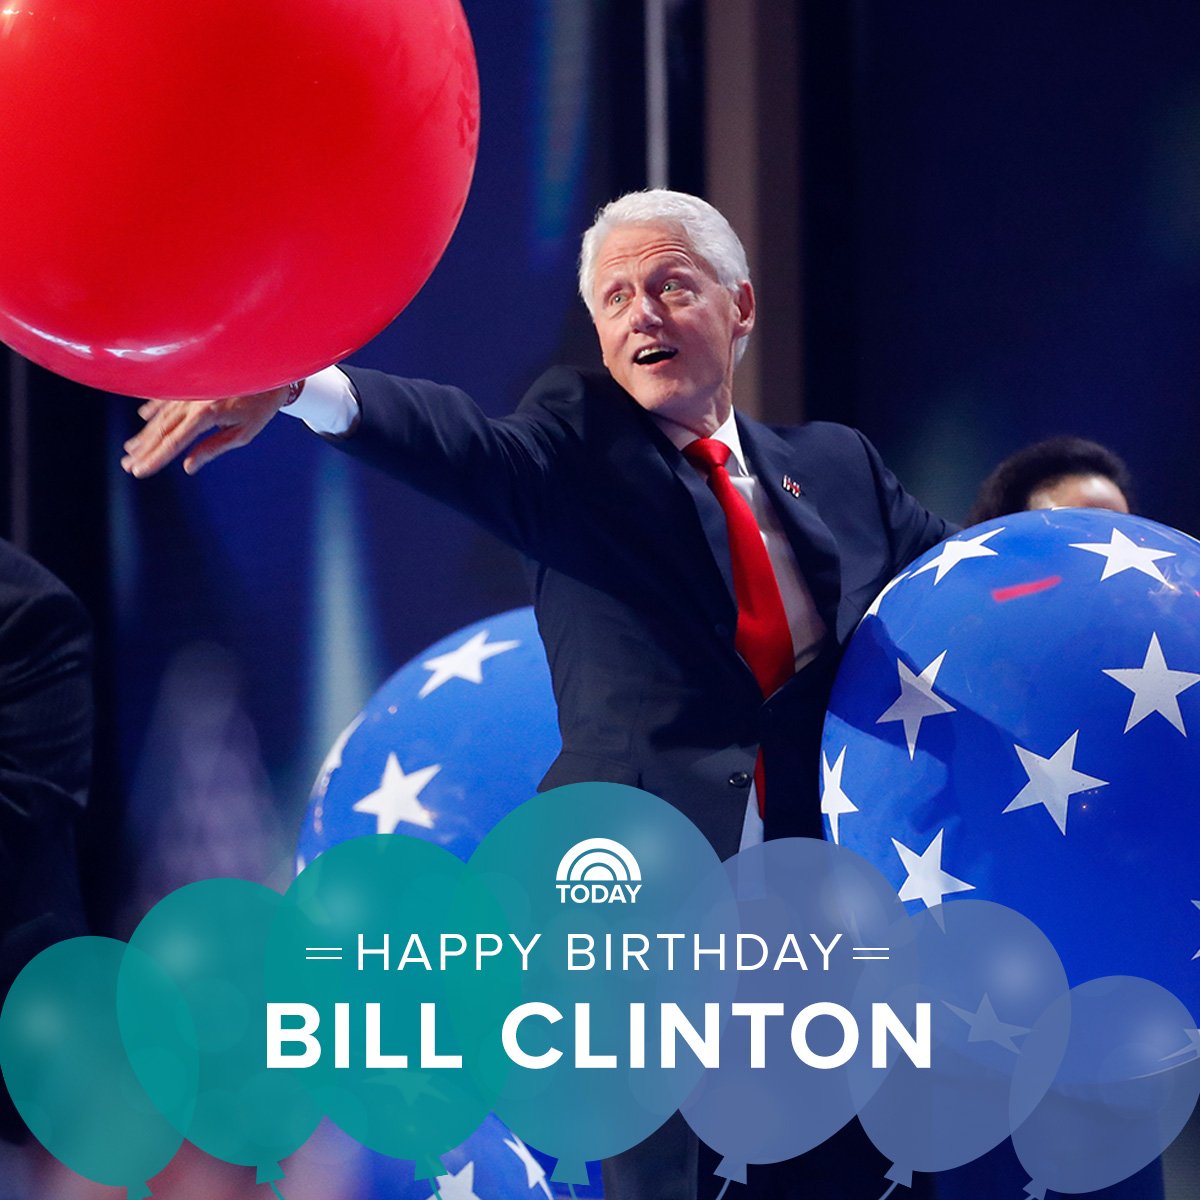 Happy birthday, Bill Clinton!  